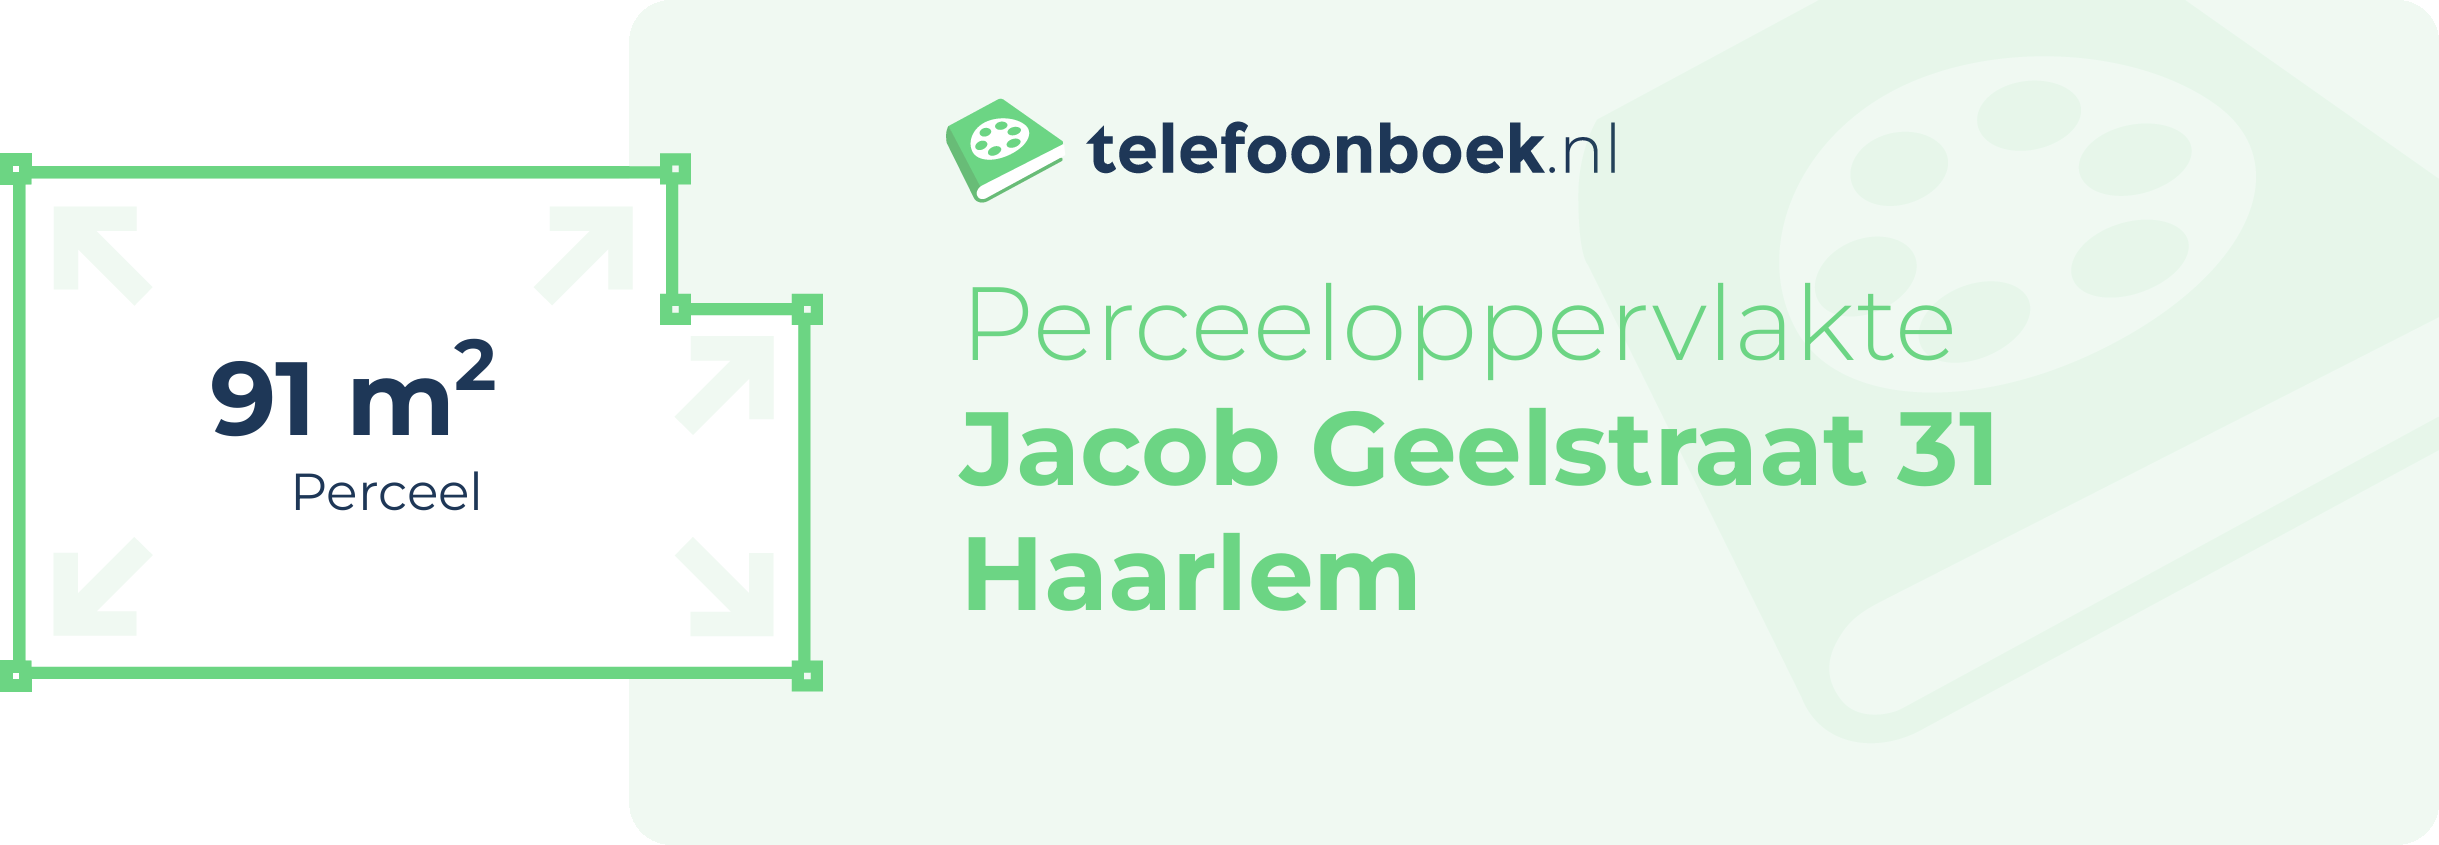 Perceeloppervlakte Jacob Geelstraat 31 Haarlem